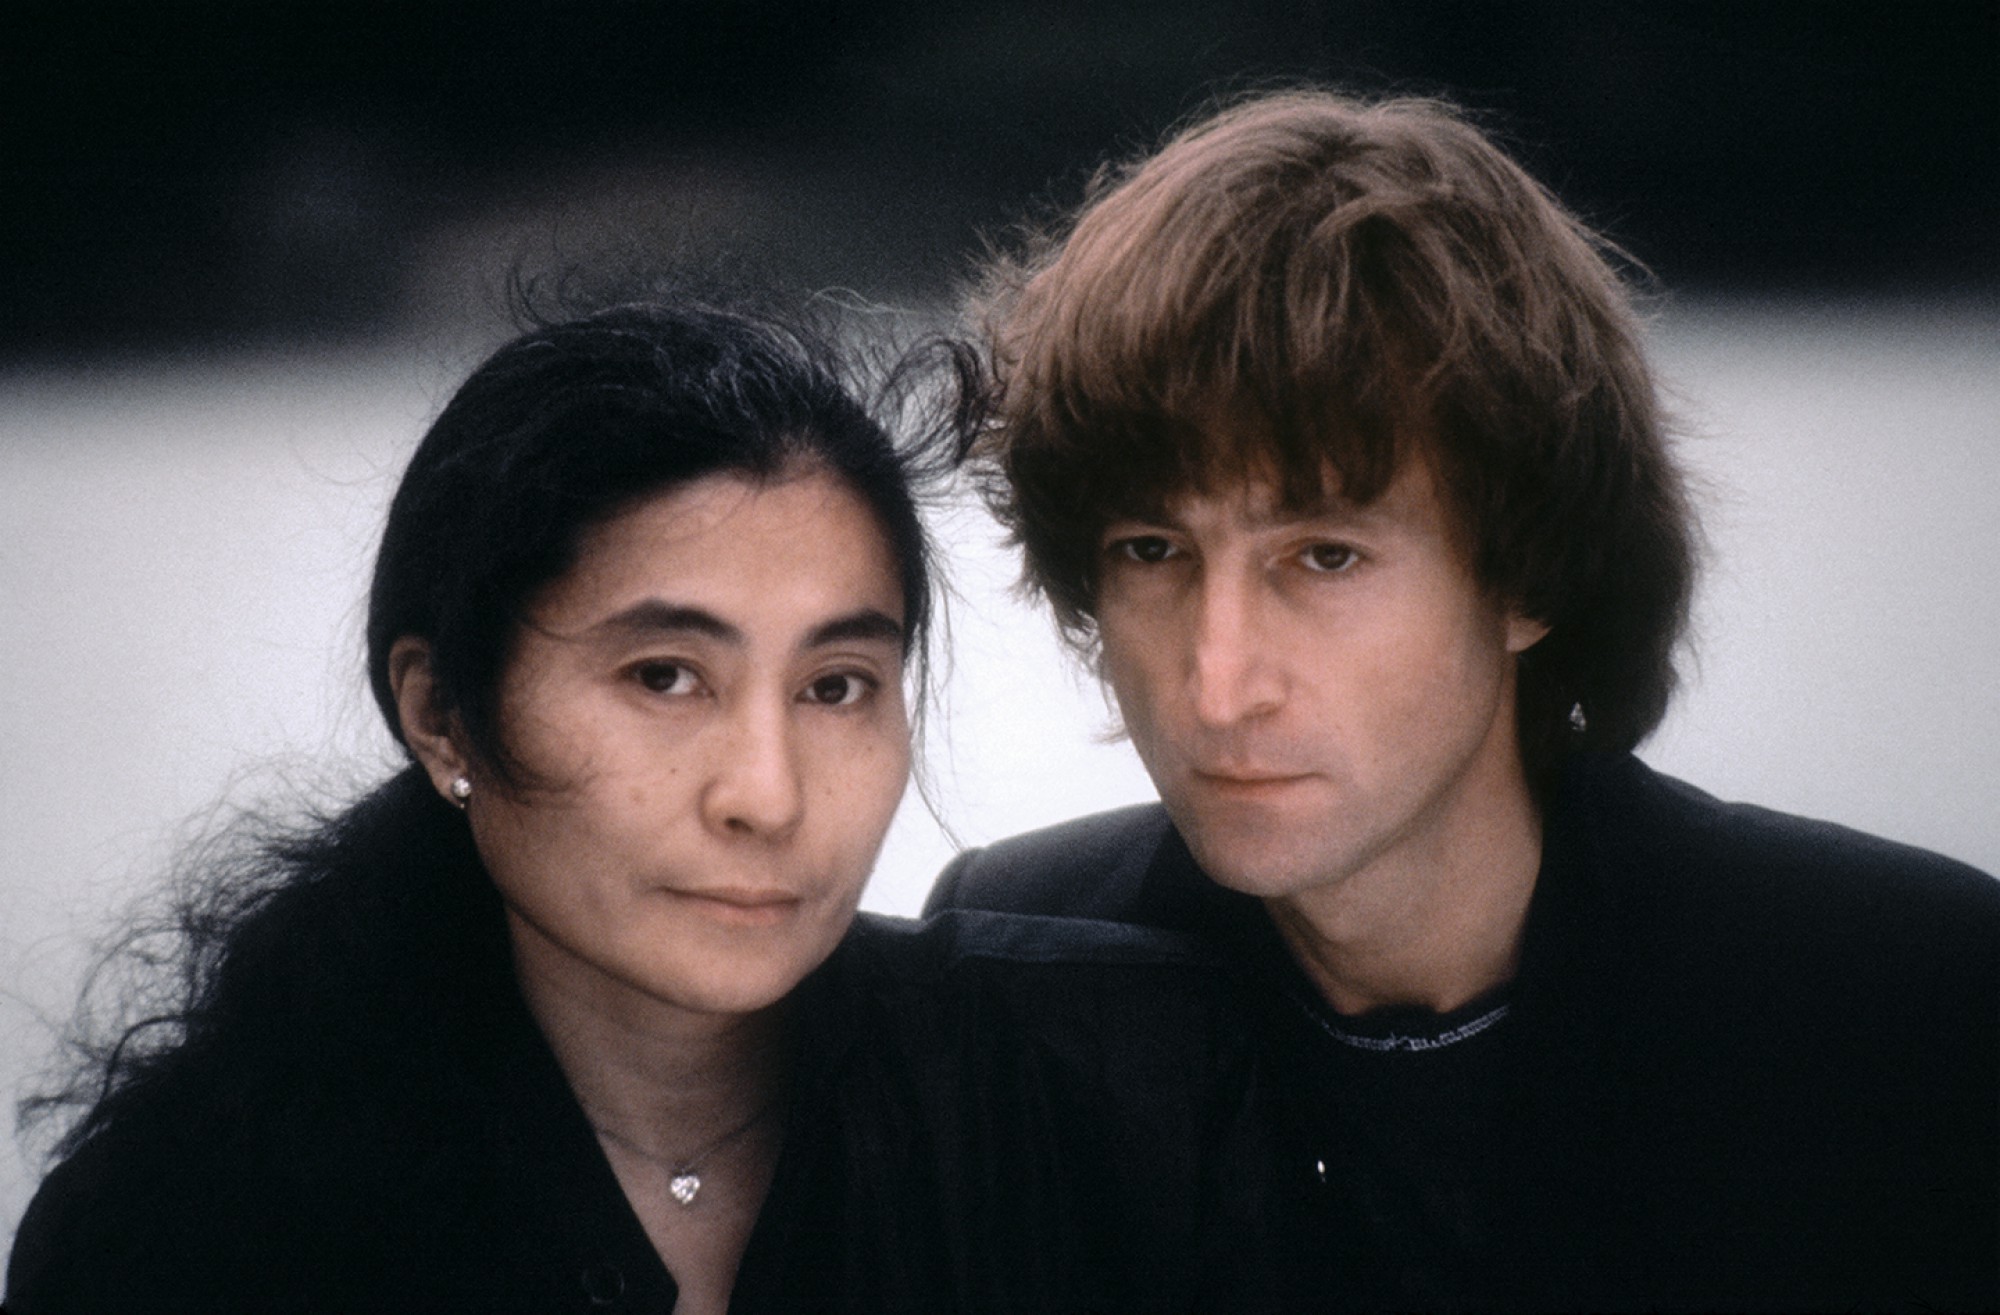 Вдова леннона. Джон Леннон и Йоко. Жена Джона Леннона Йоко. Леннон и Йоко оно. Джон Леннон и Йоко оно фото.